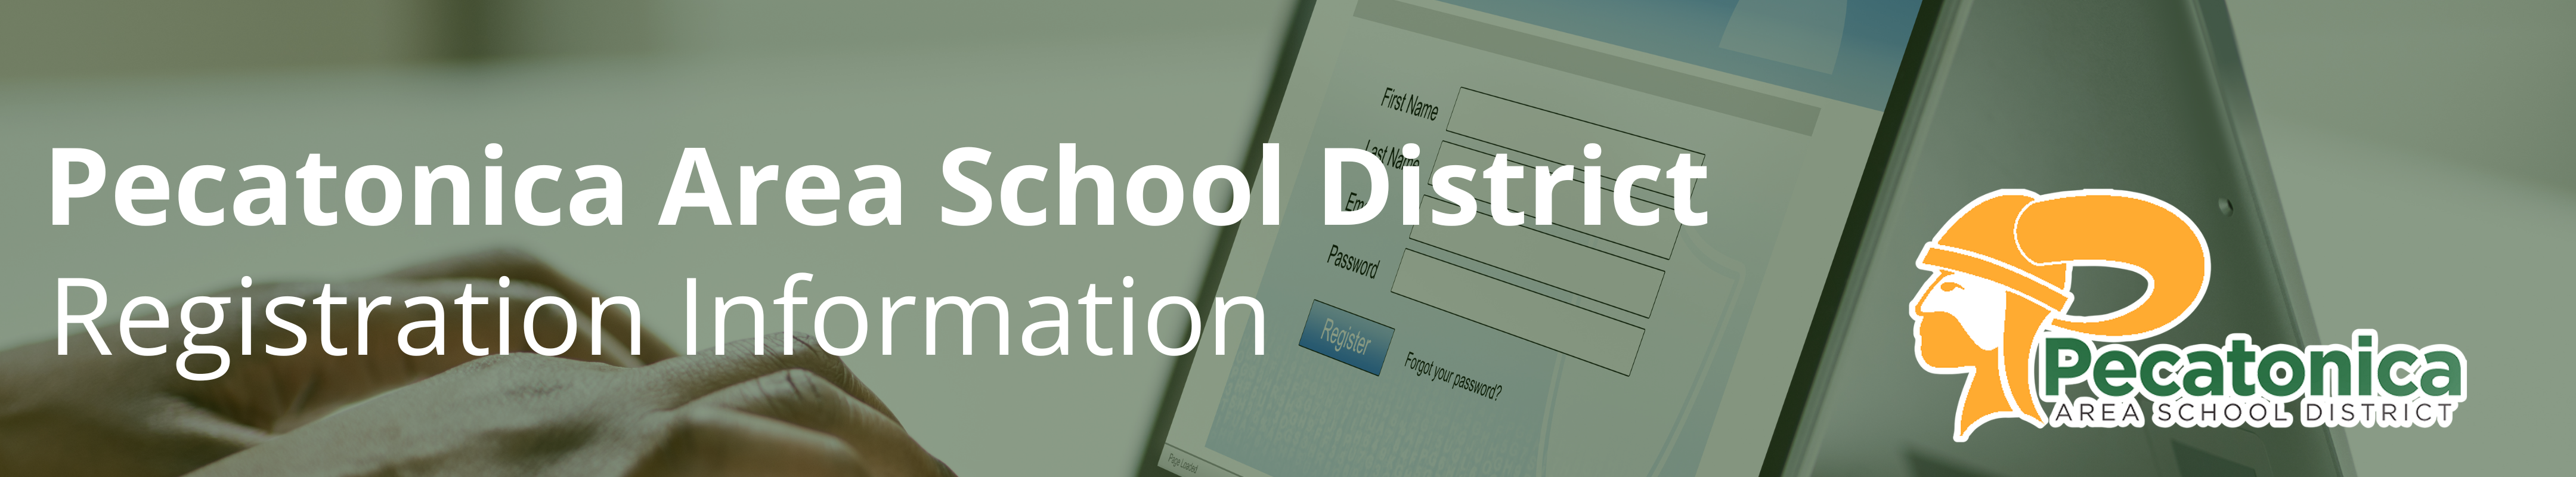 Pecatonica Area School District Registration Information